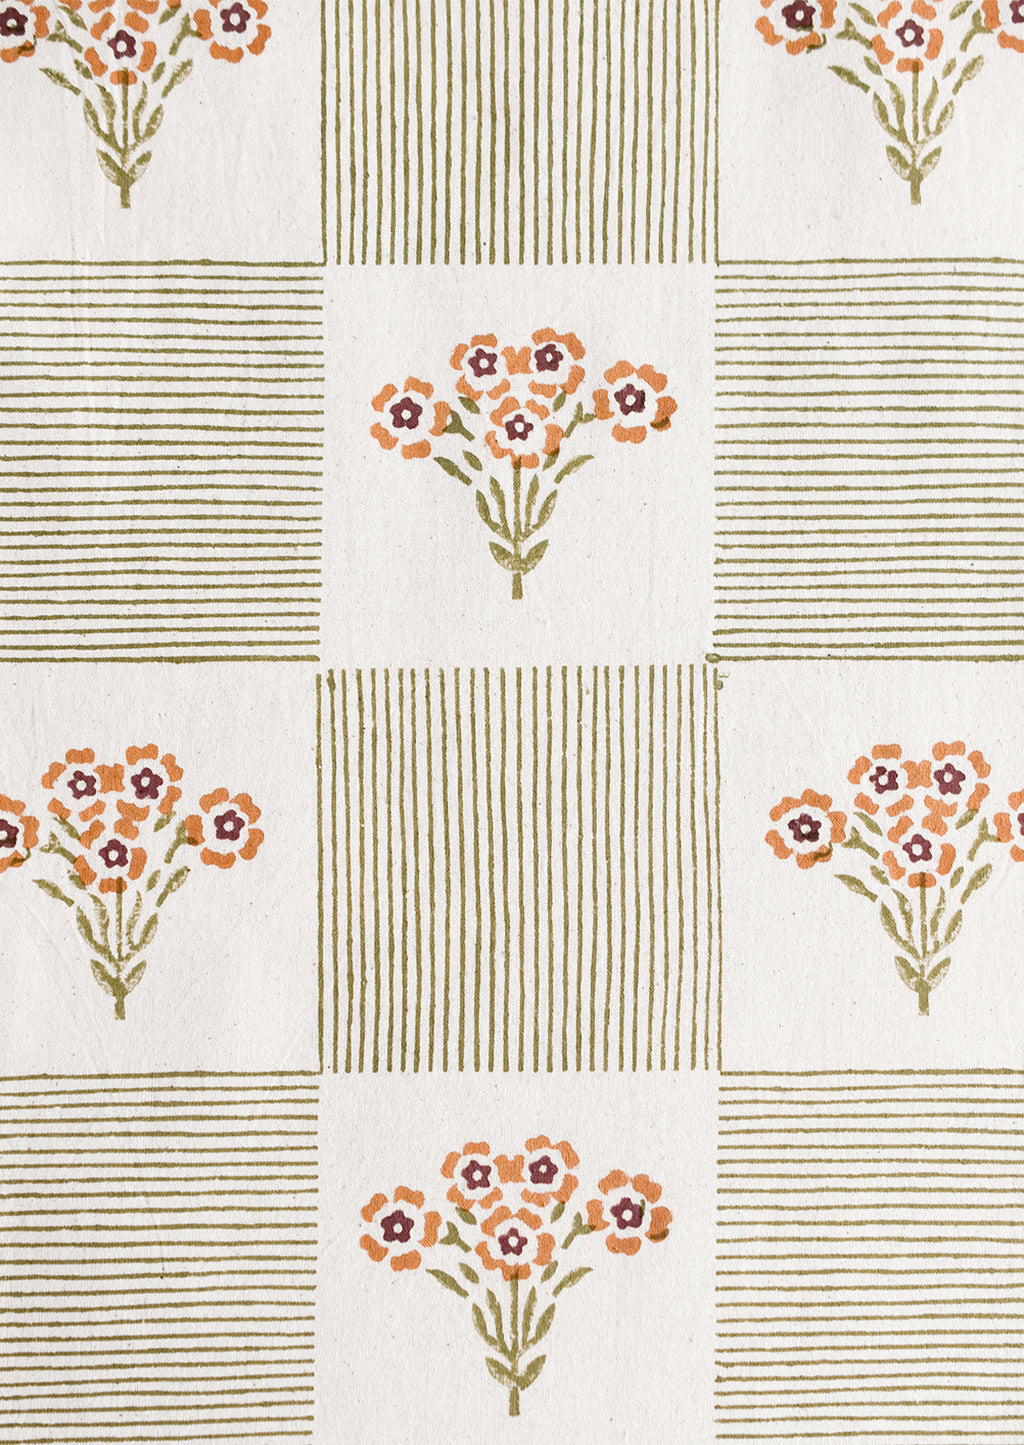 3: A block print floral checker print on cotton.